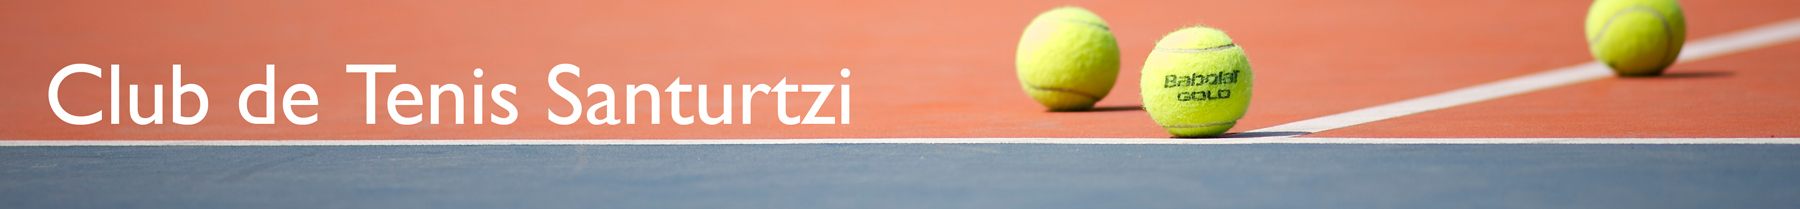 Bienvenido al Club de tenis Santurtzi